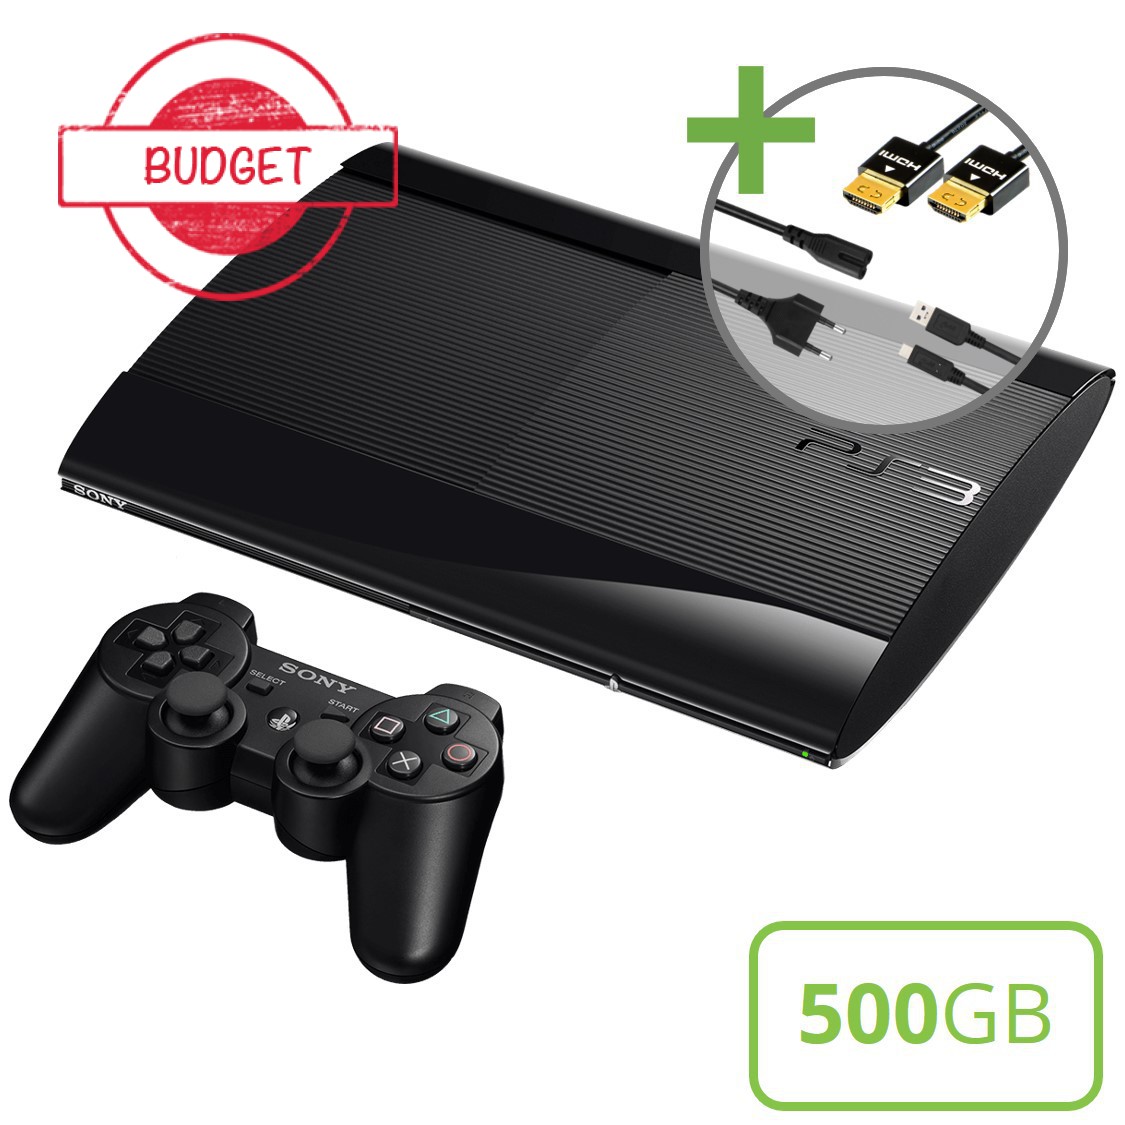 Sony PlayStation 3 Super Slim (500GB) Starter Pack - DualShock Edition - Budget Kopen | Playstation 3 Hardware